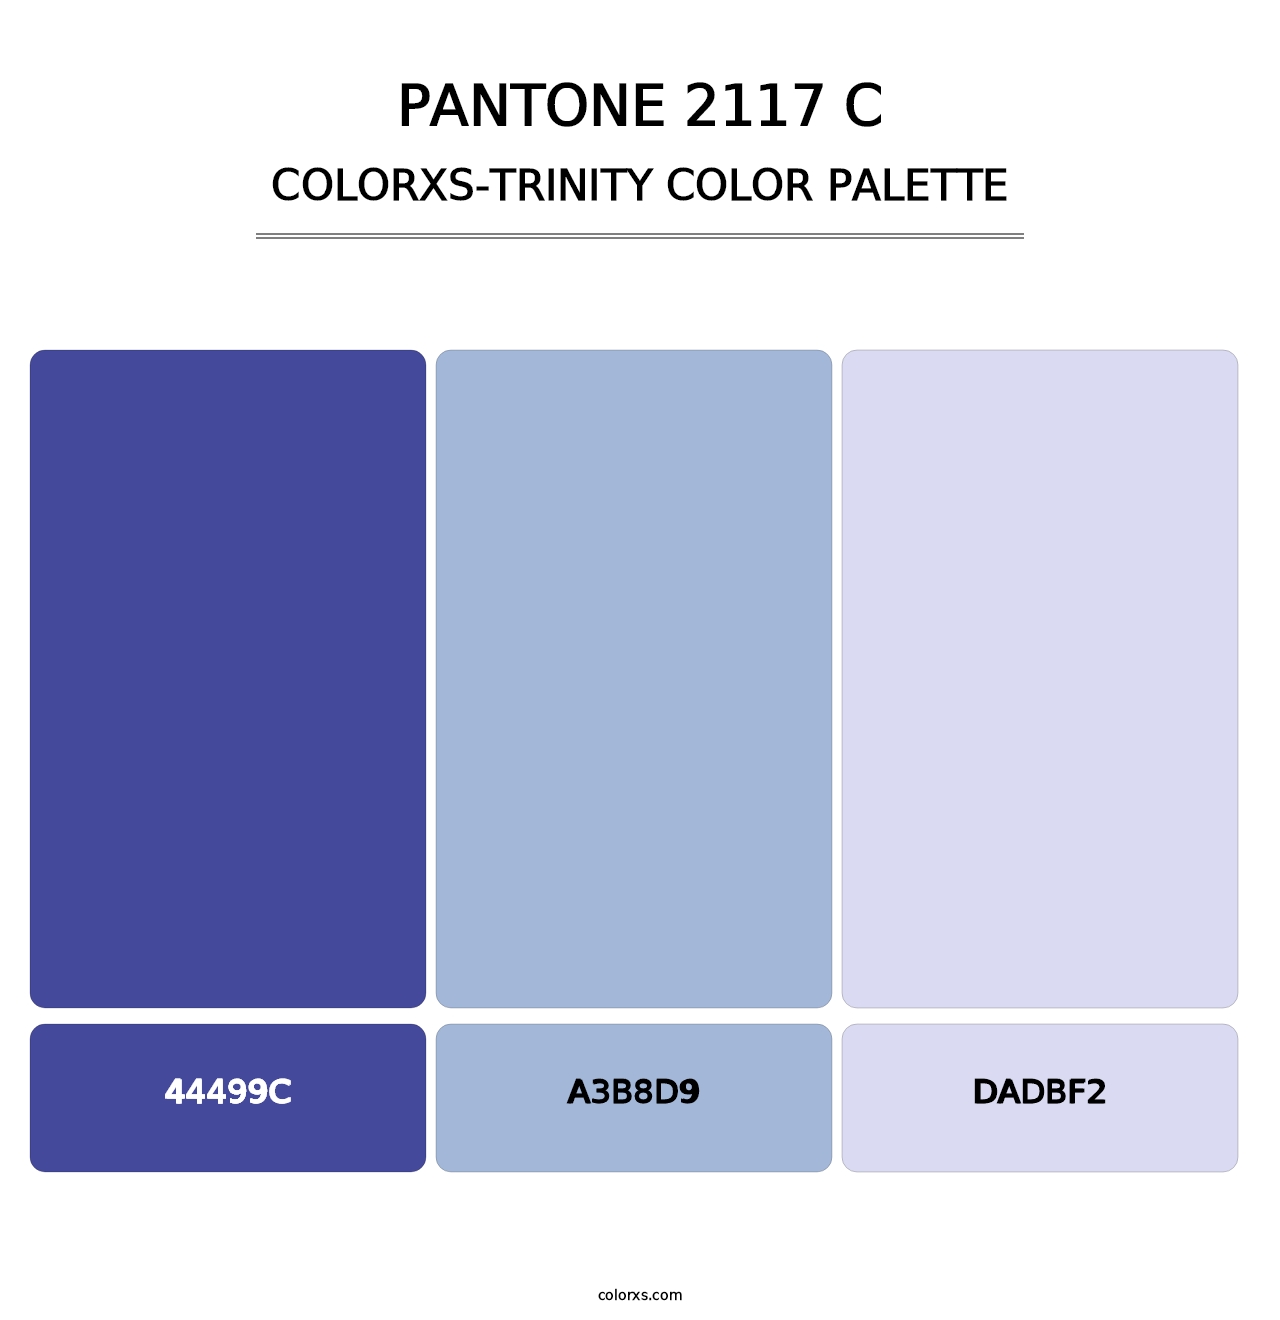 PANTONE 2117 C - Colorxs Trinity Palette